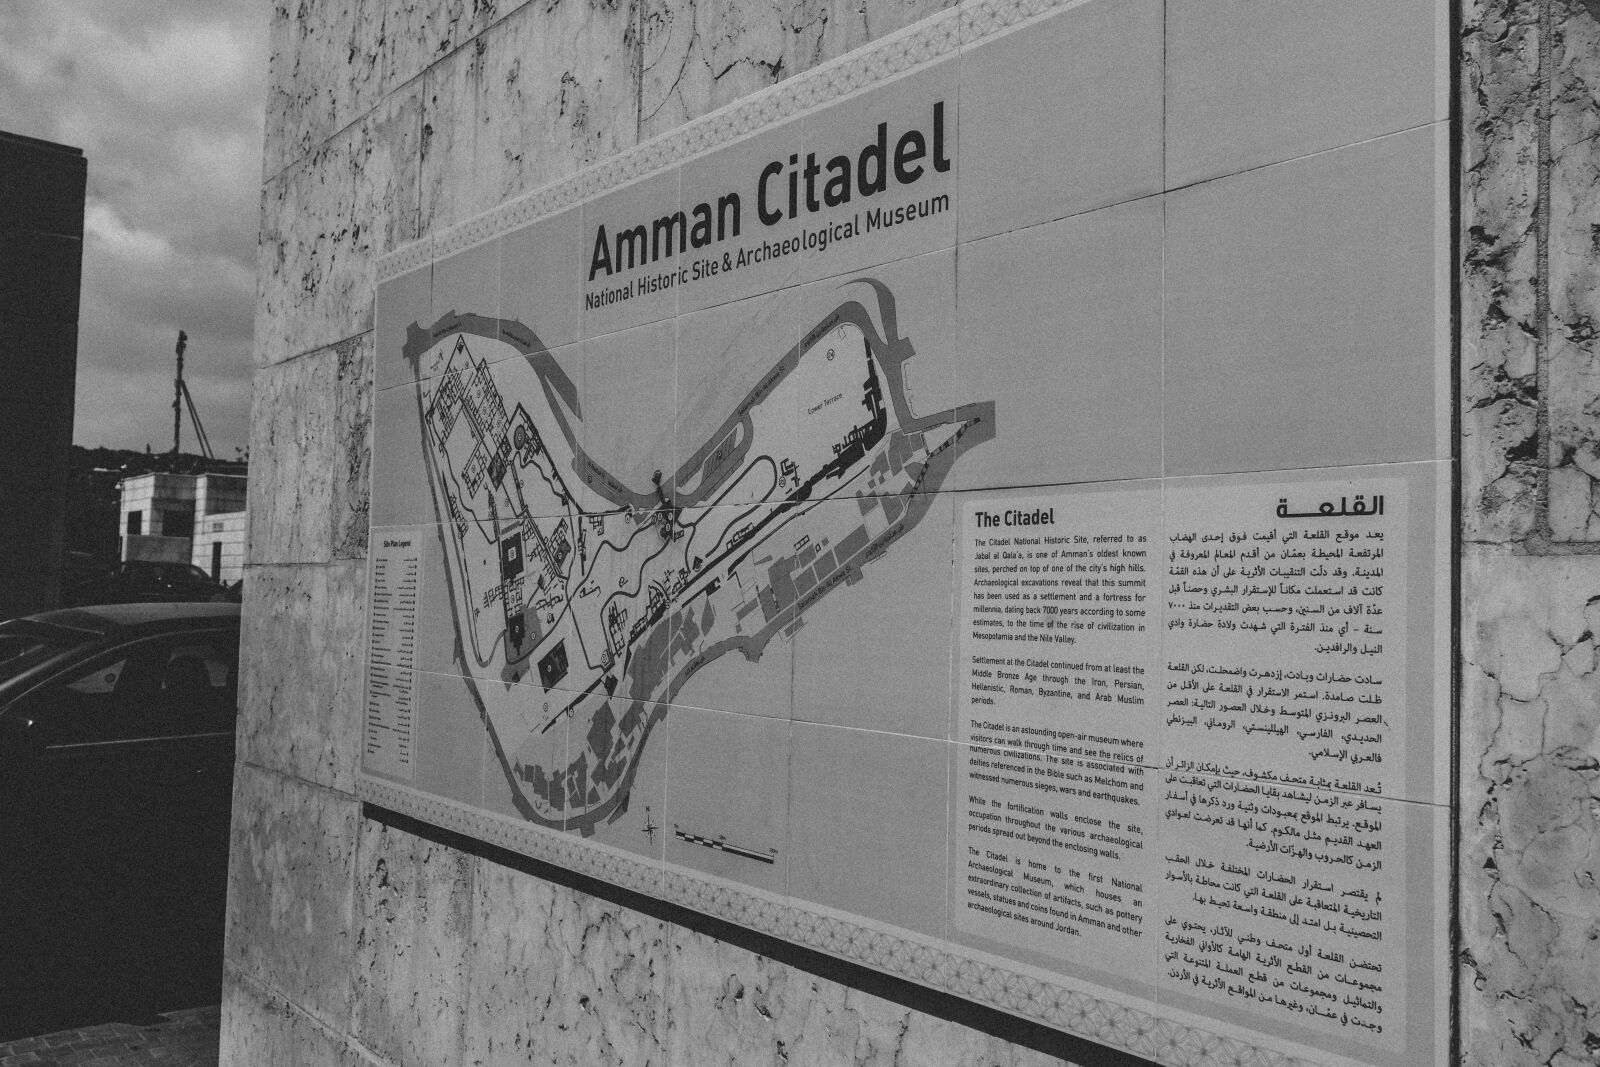 Sigma 18-35mm F1.8 DC HSM Art sample photo. Amman, citadel, historic, historic photography